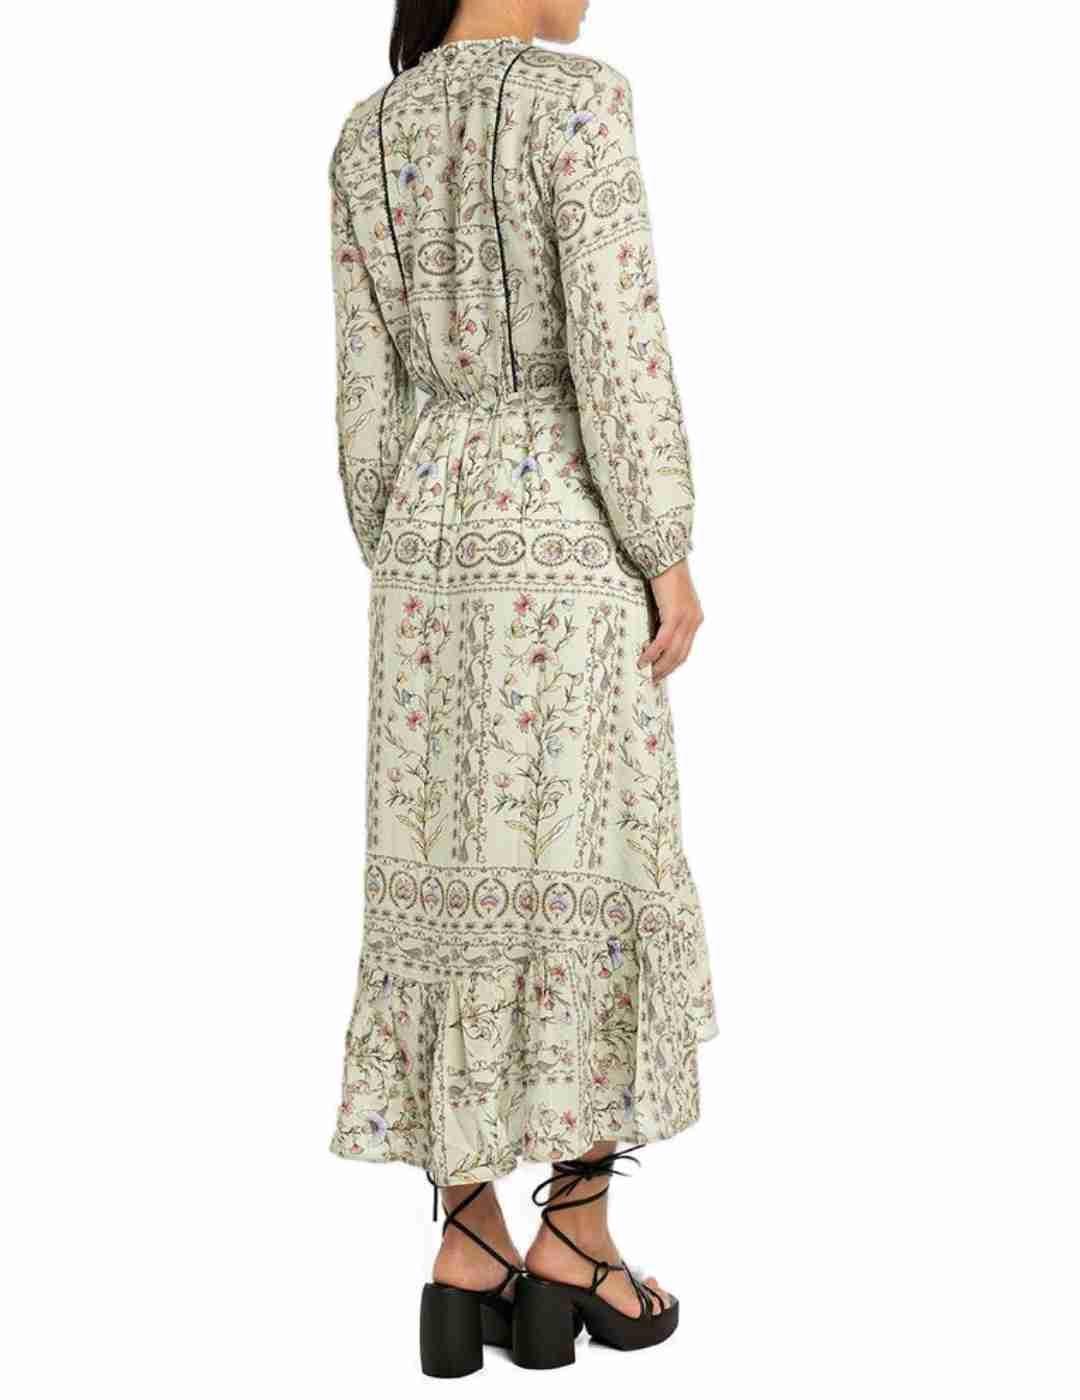 Vestido Replay largo estampado floral manga larga de mujer